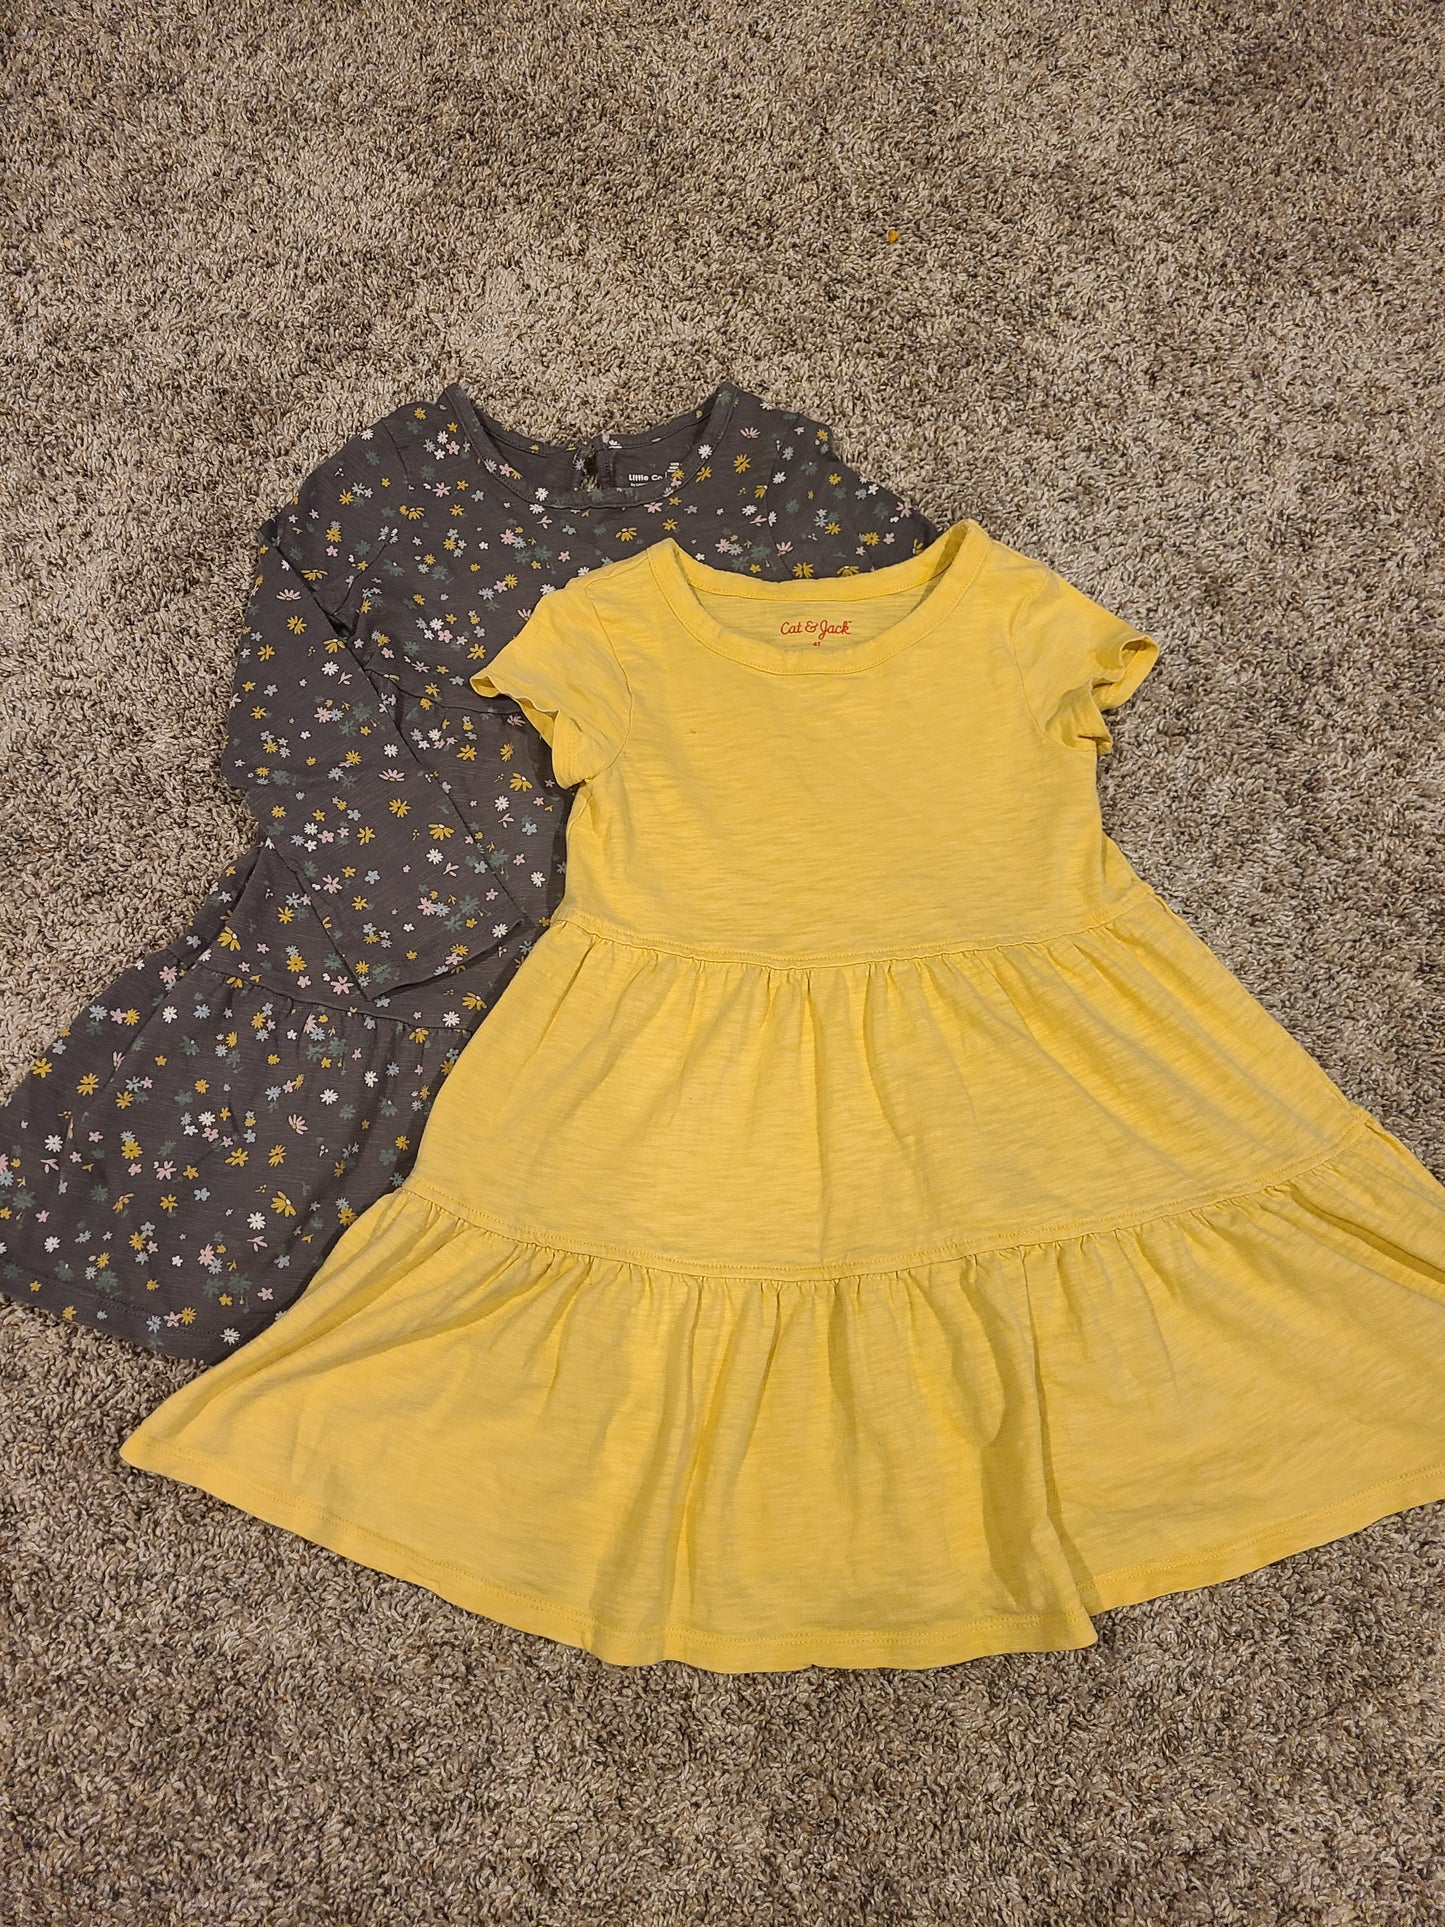 Girl's 4T Dresses Cat & Jack and Little Co bundle